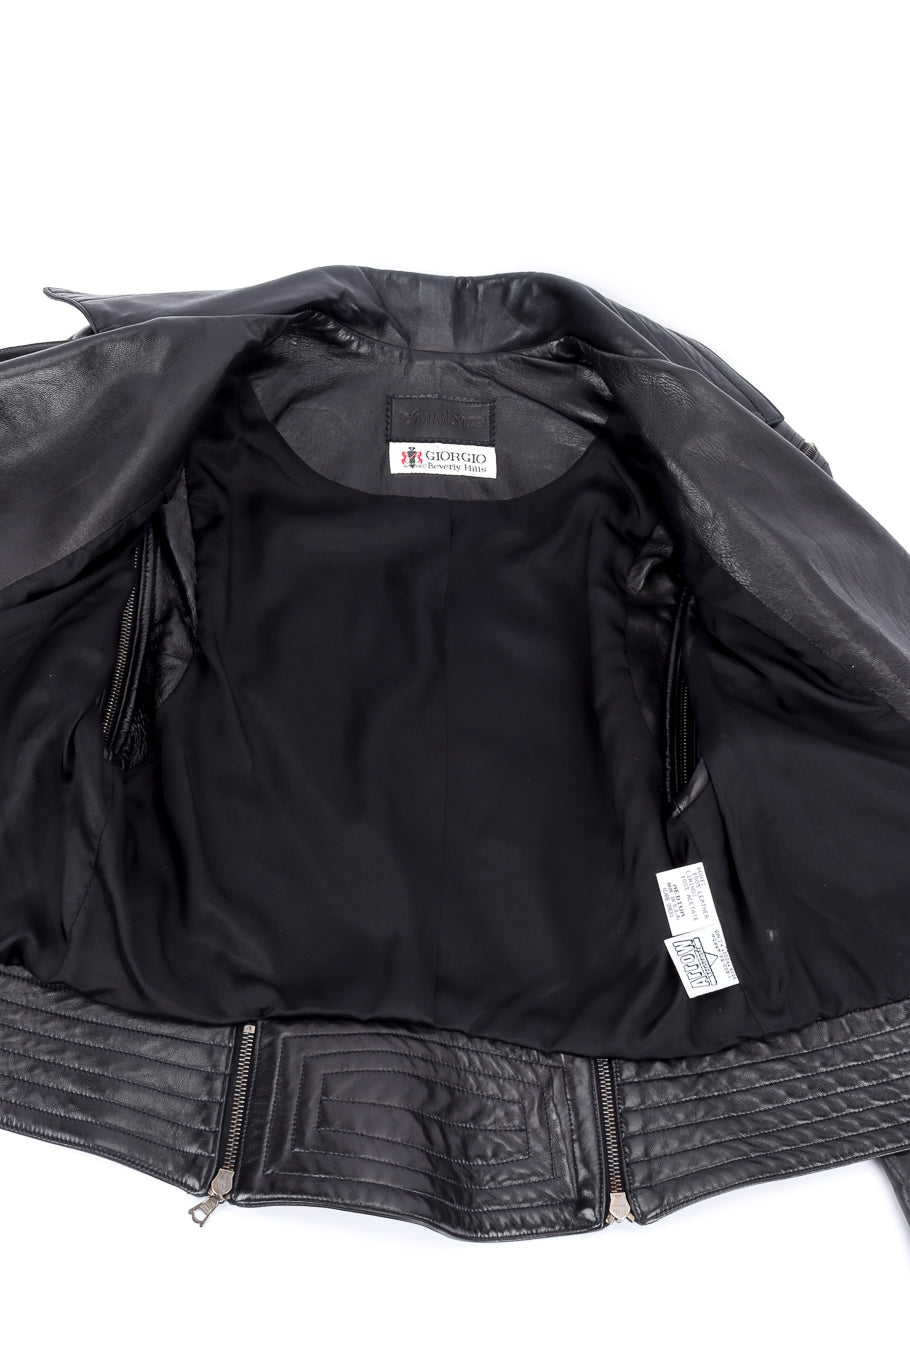 Vintage John Michael Convertible Leather Moto Jacket view of lining @recessla